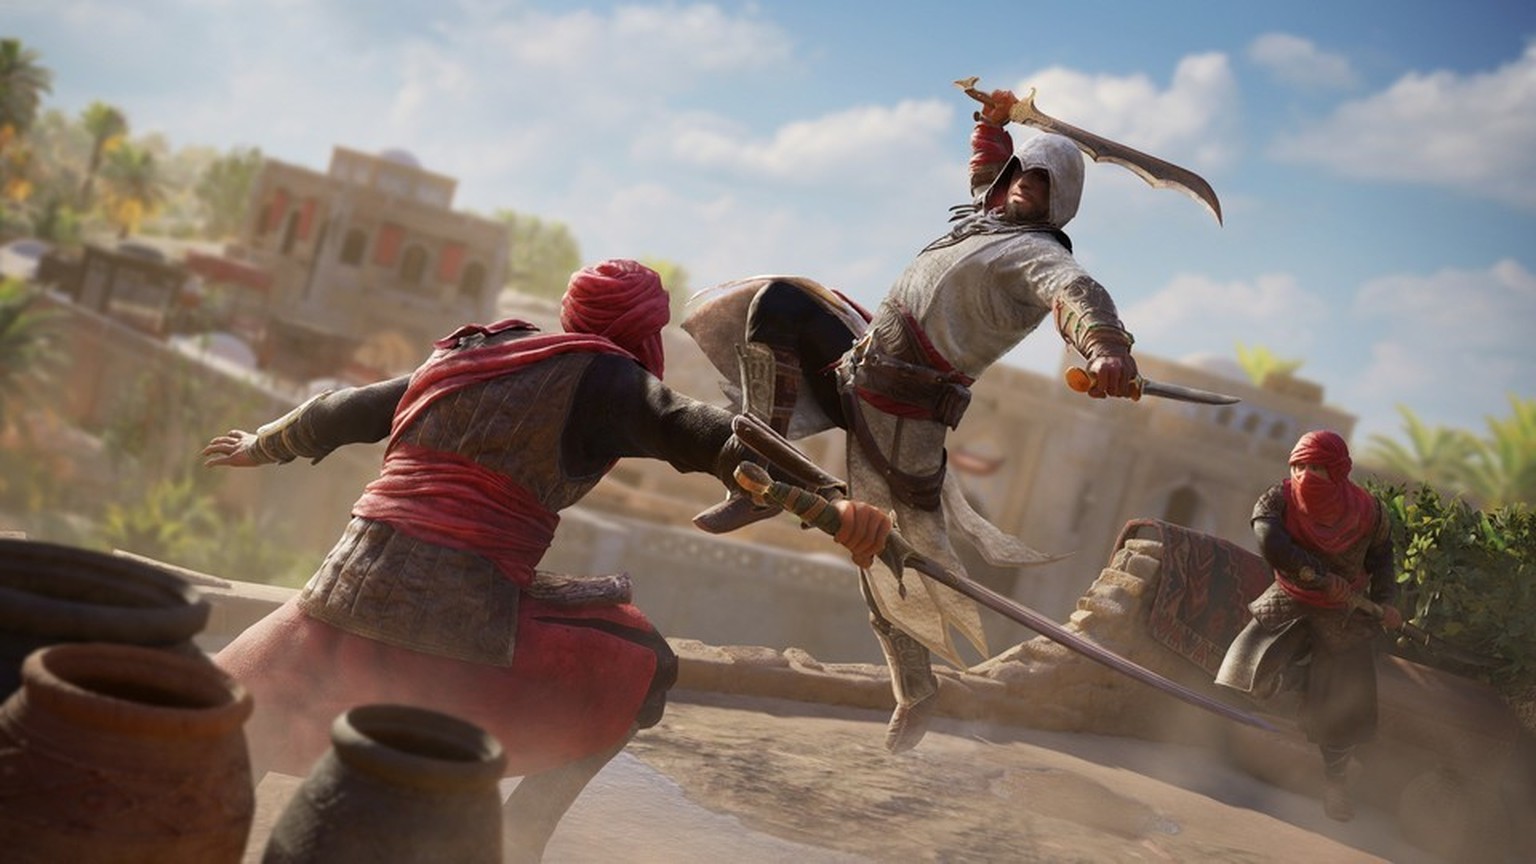 Szene aus dem neuen Spiel Assassin’s Creed